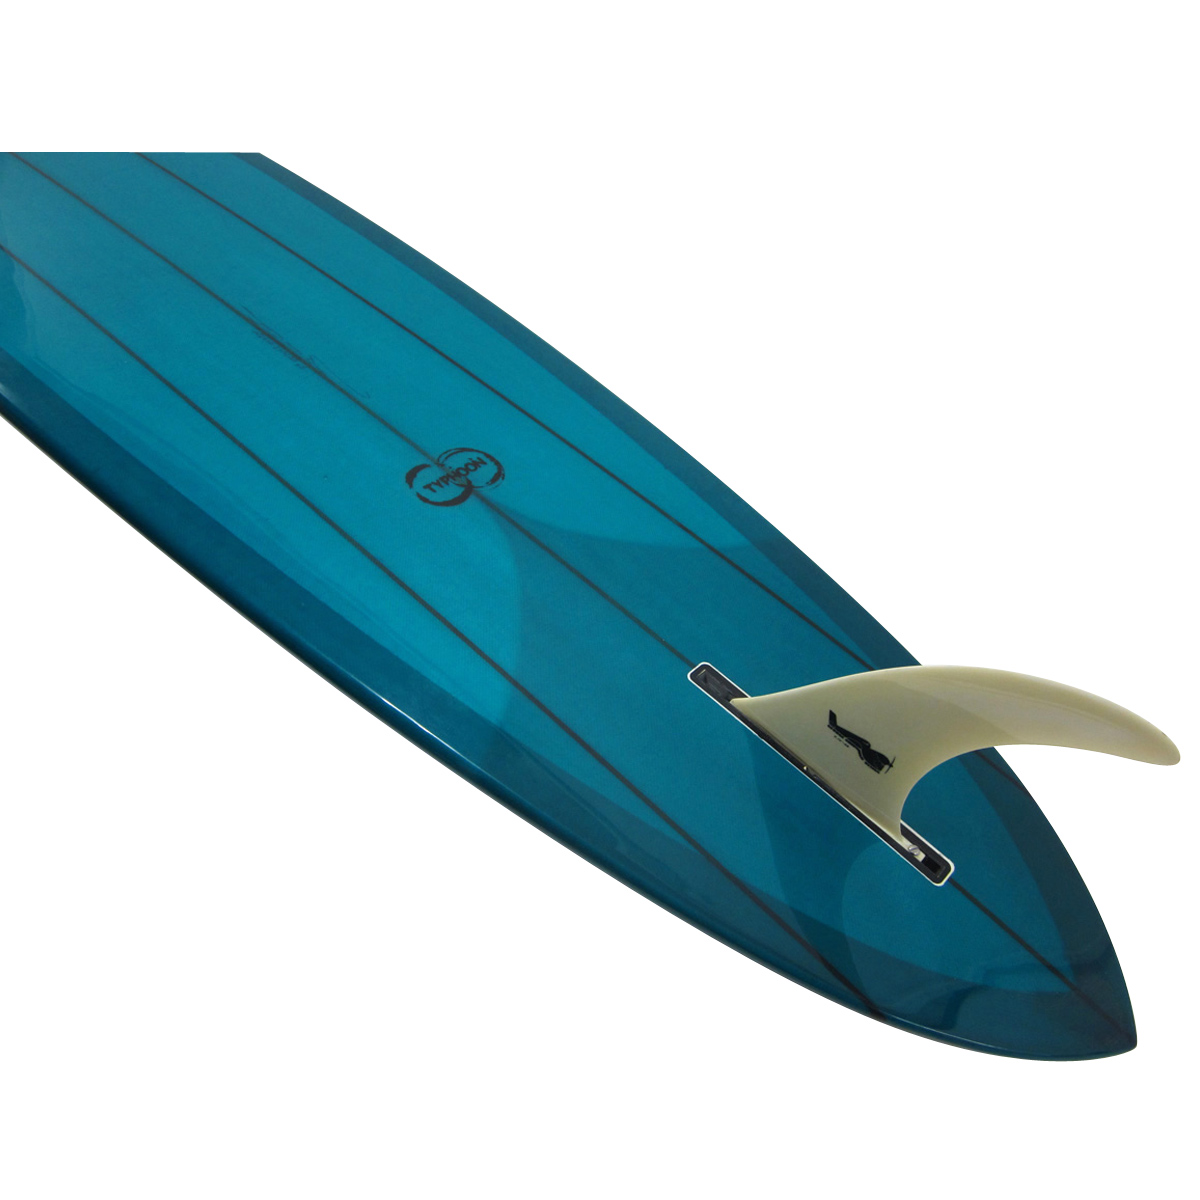 Typhoon Surfboards / 9'6 Legend Model Shaped By Chris Christenson